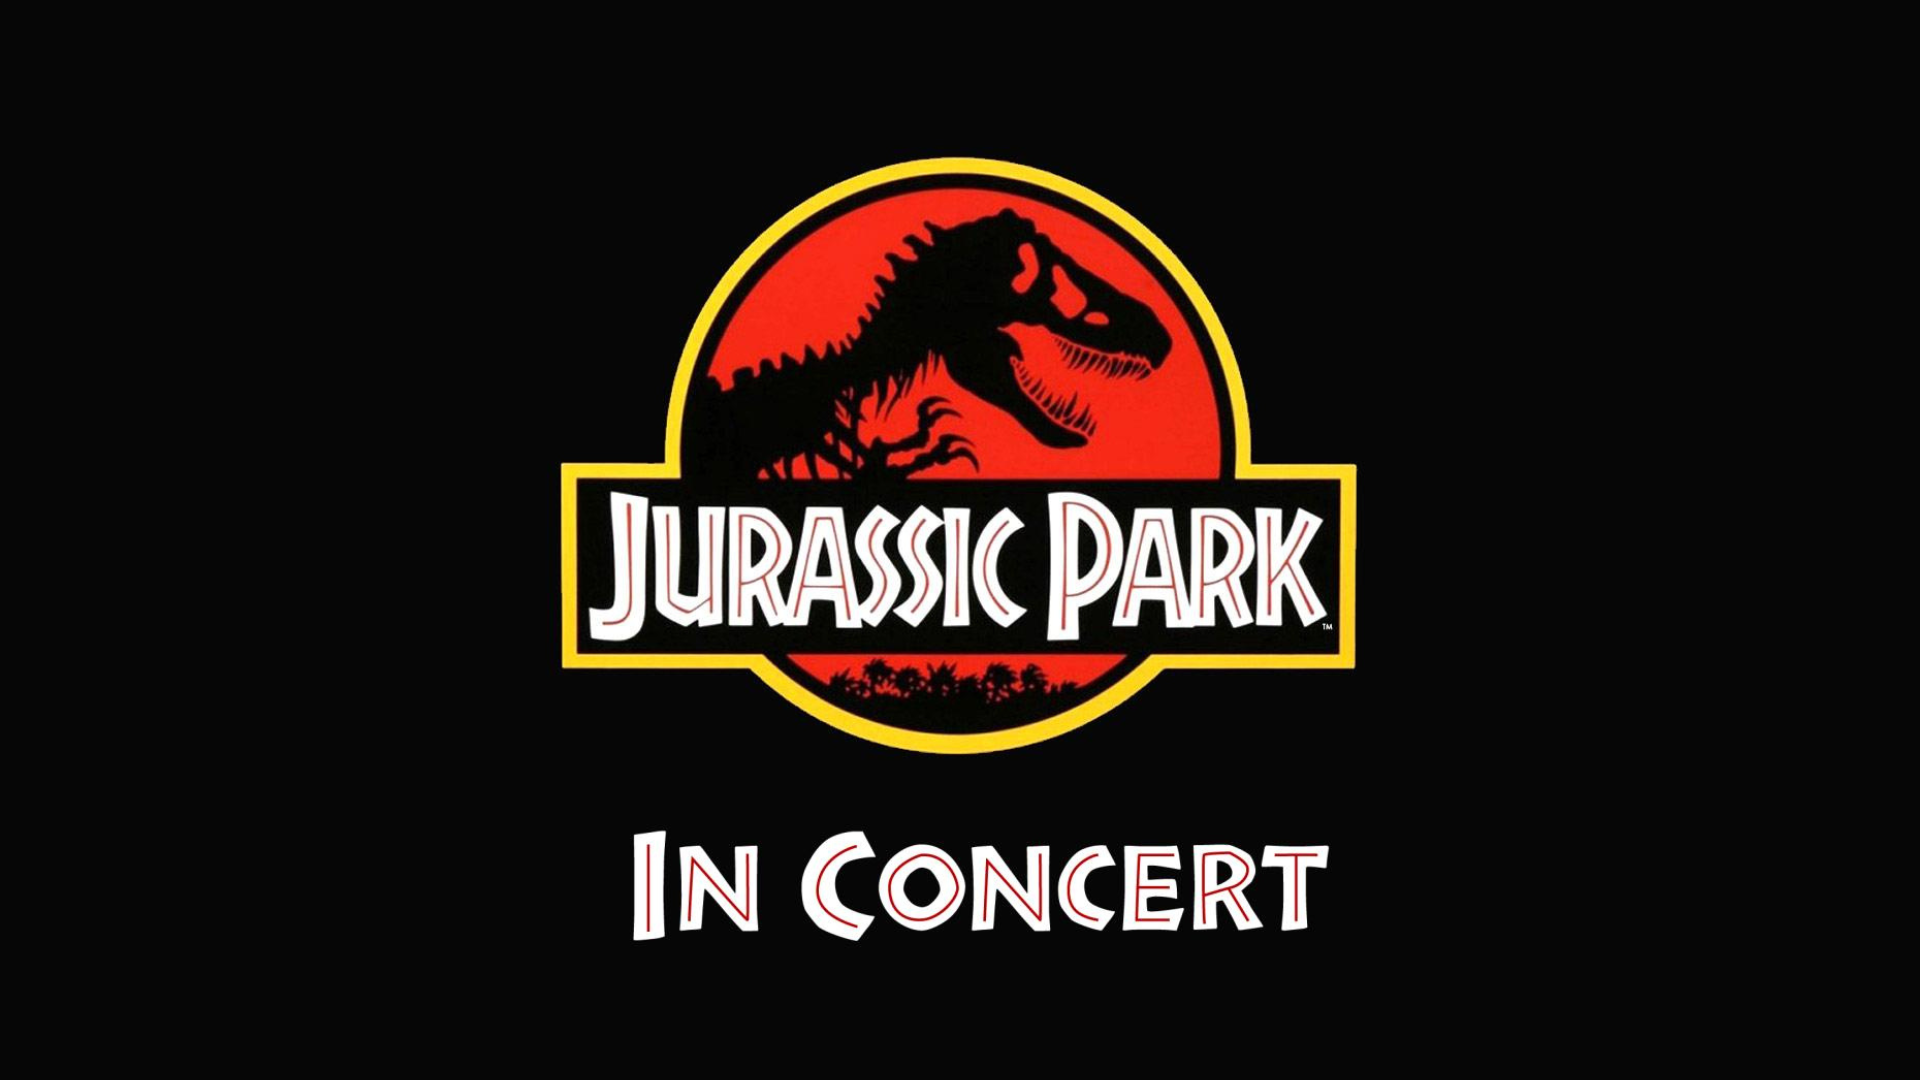 Jurassic Park™ in Concert